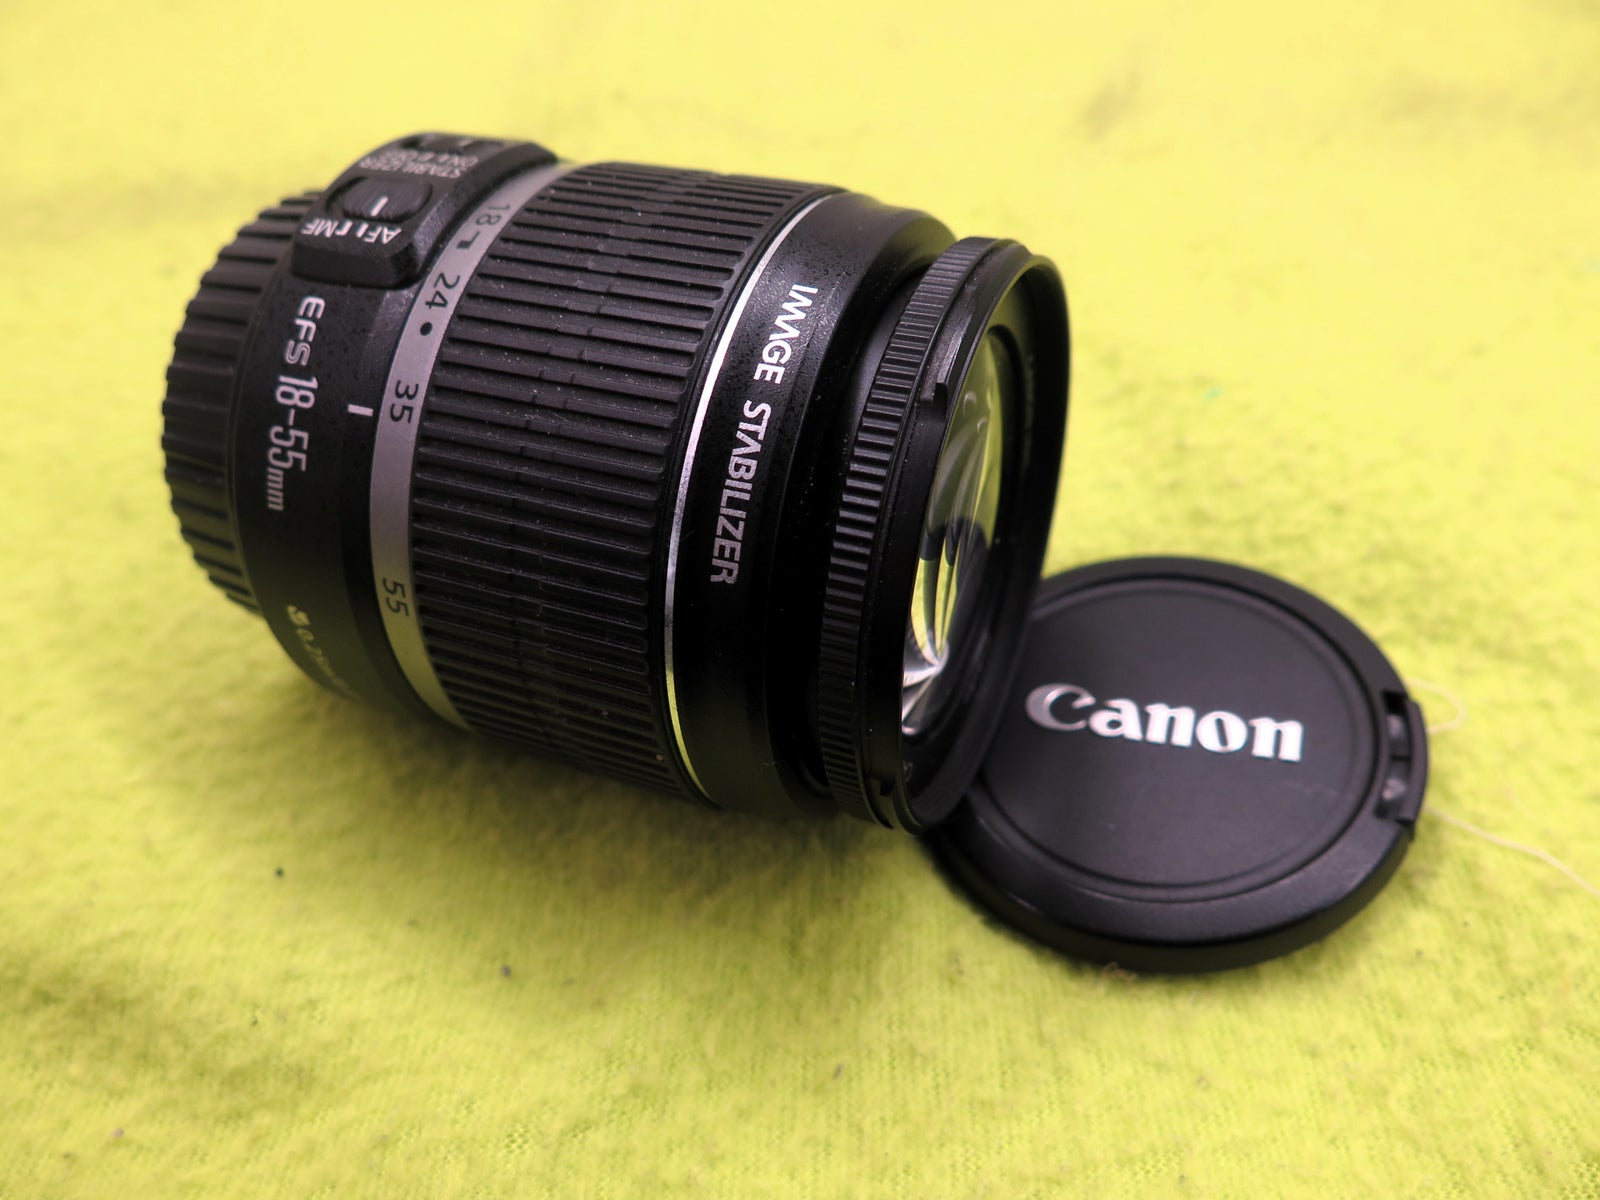 Canon, Canon EOS 7D, spejlrefleks